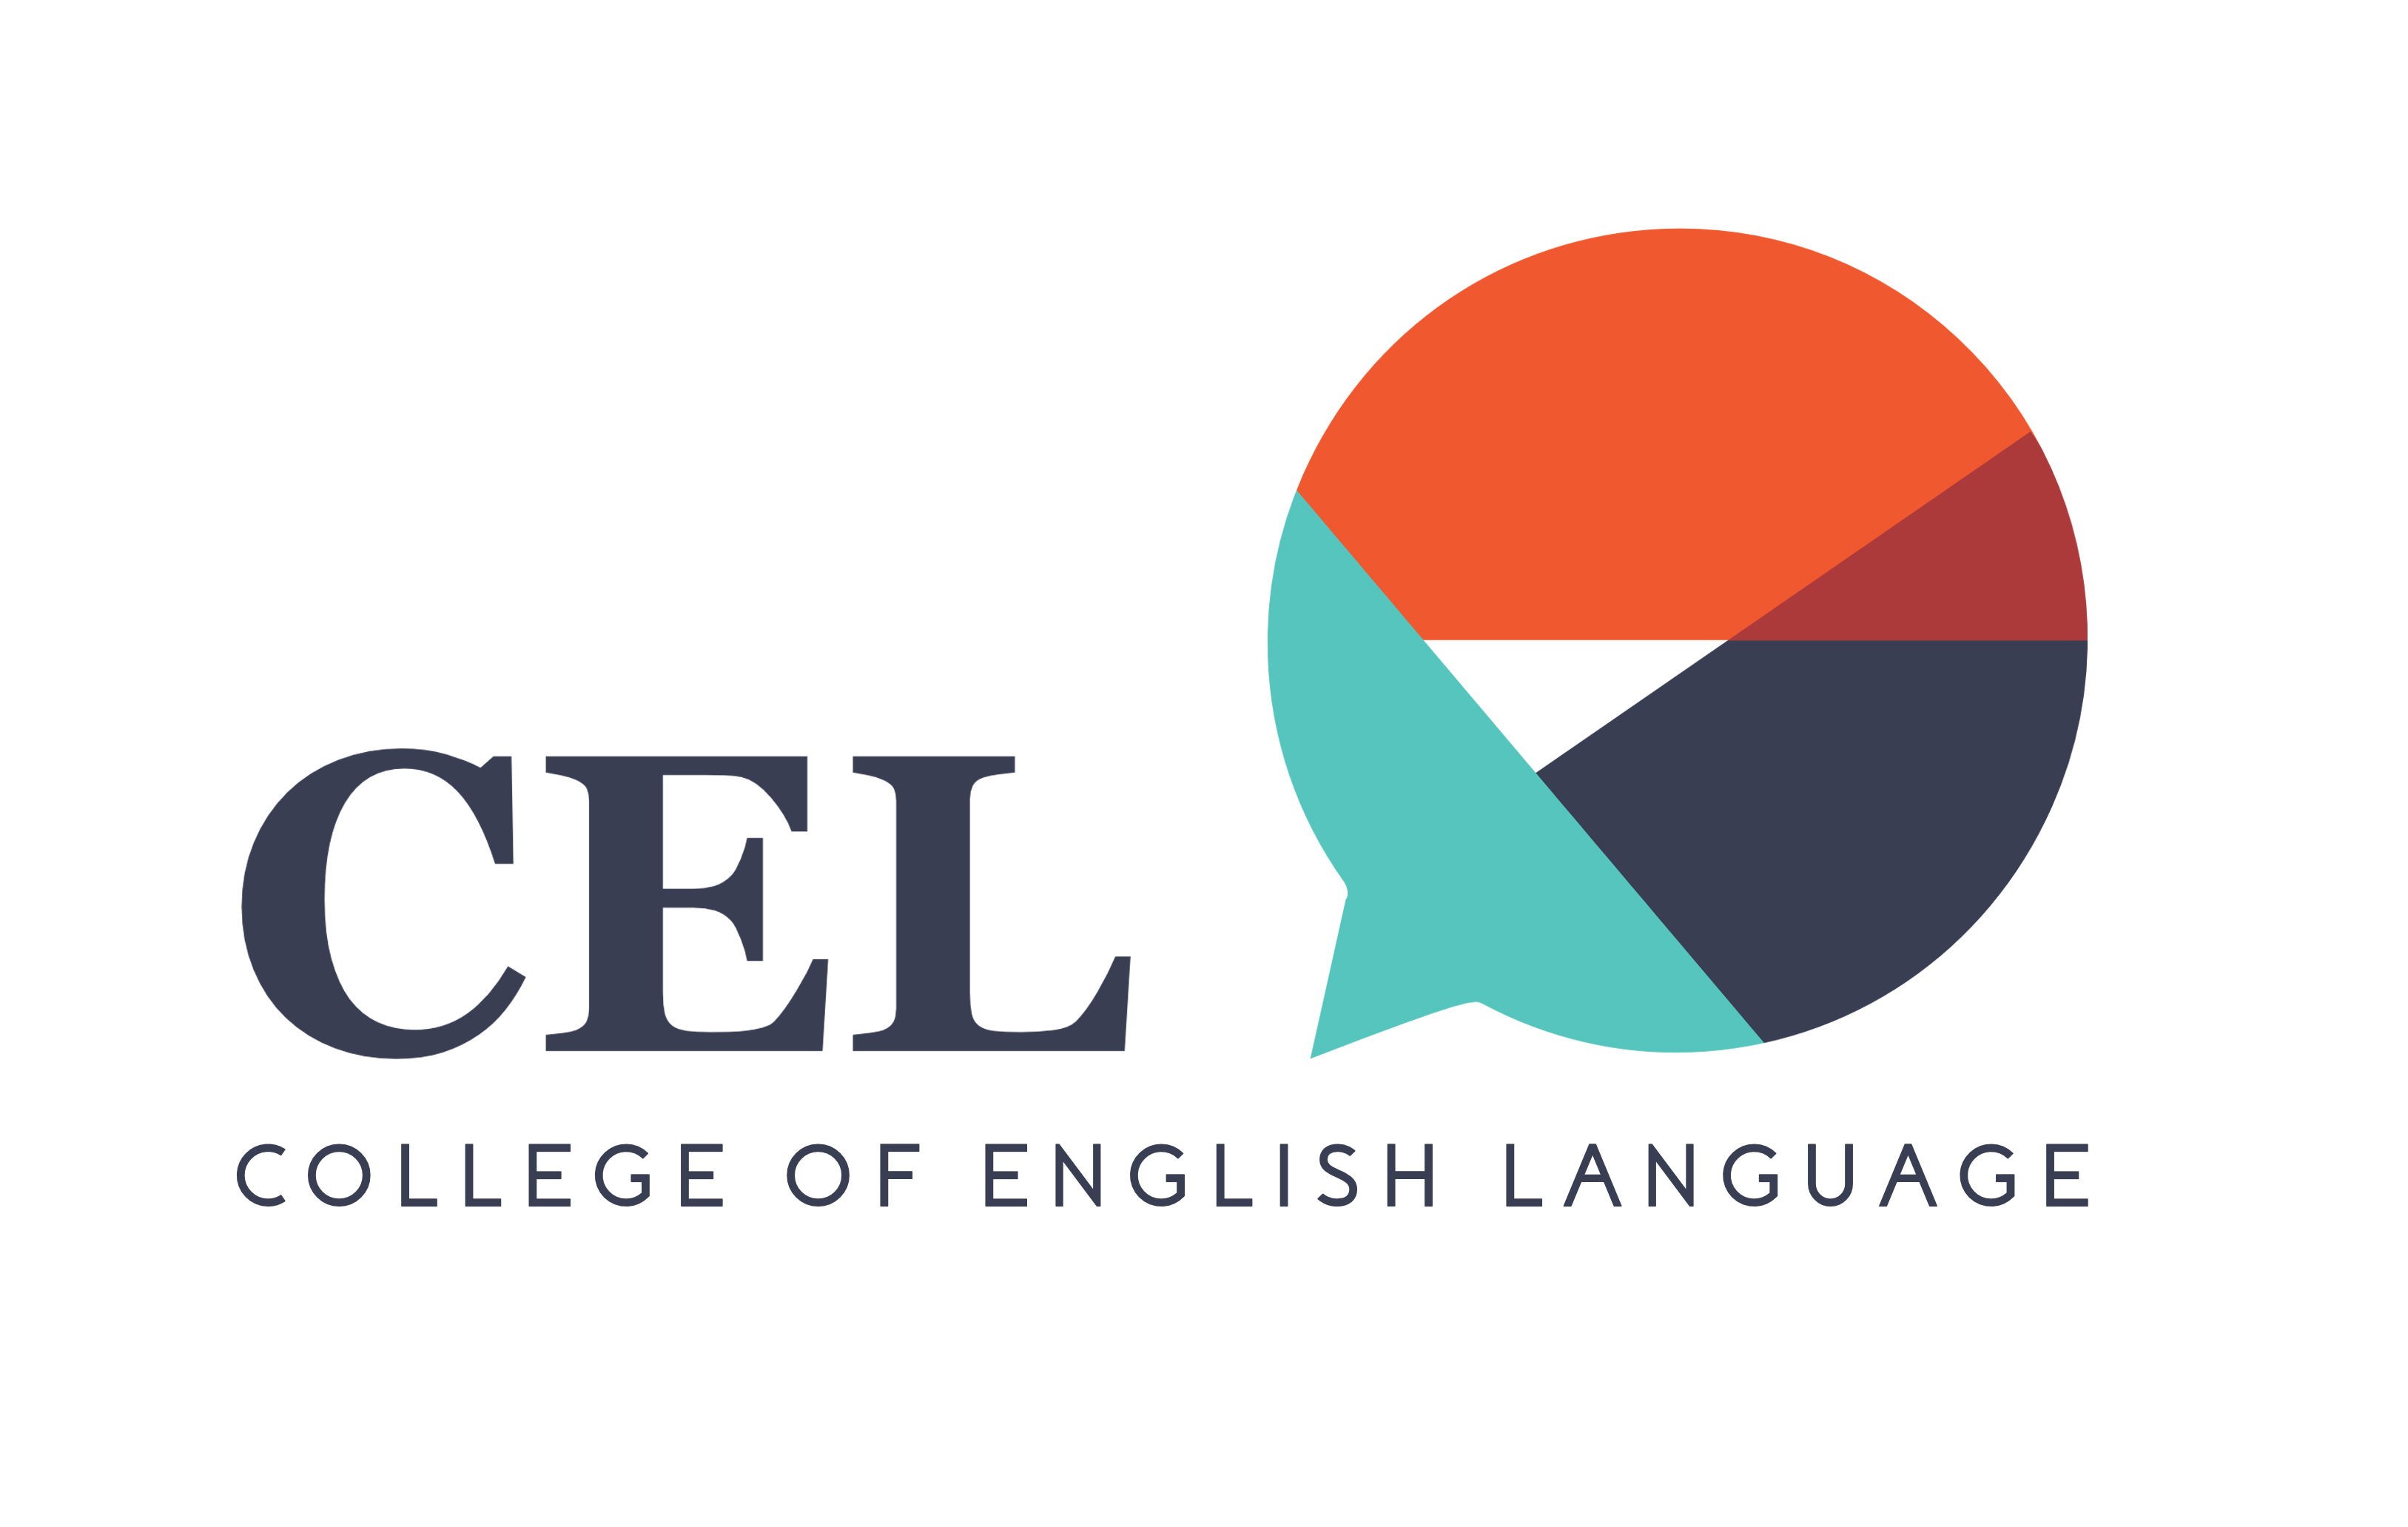 College of English Language (CEL) – Santa Monica